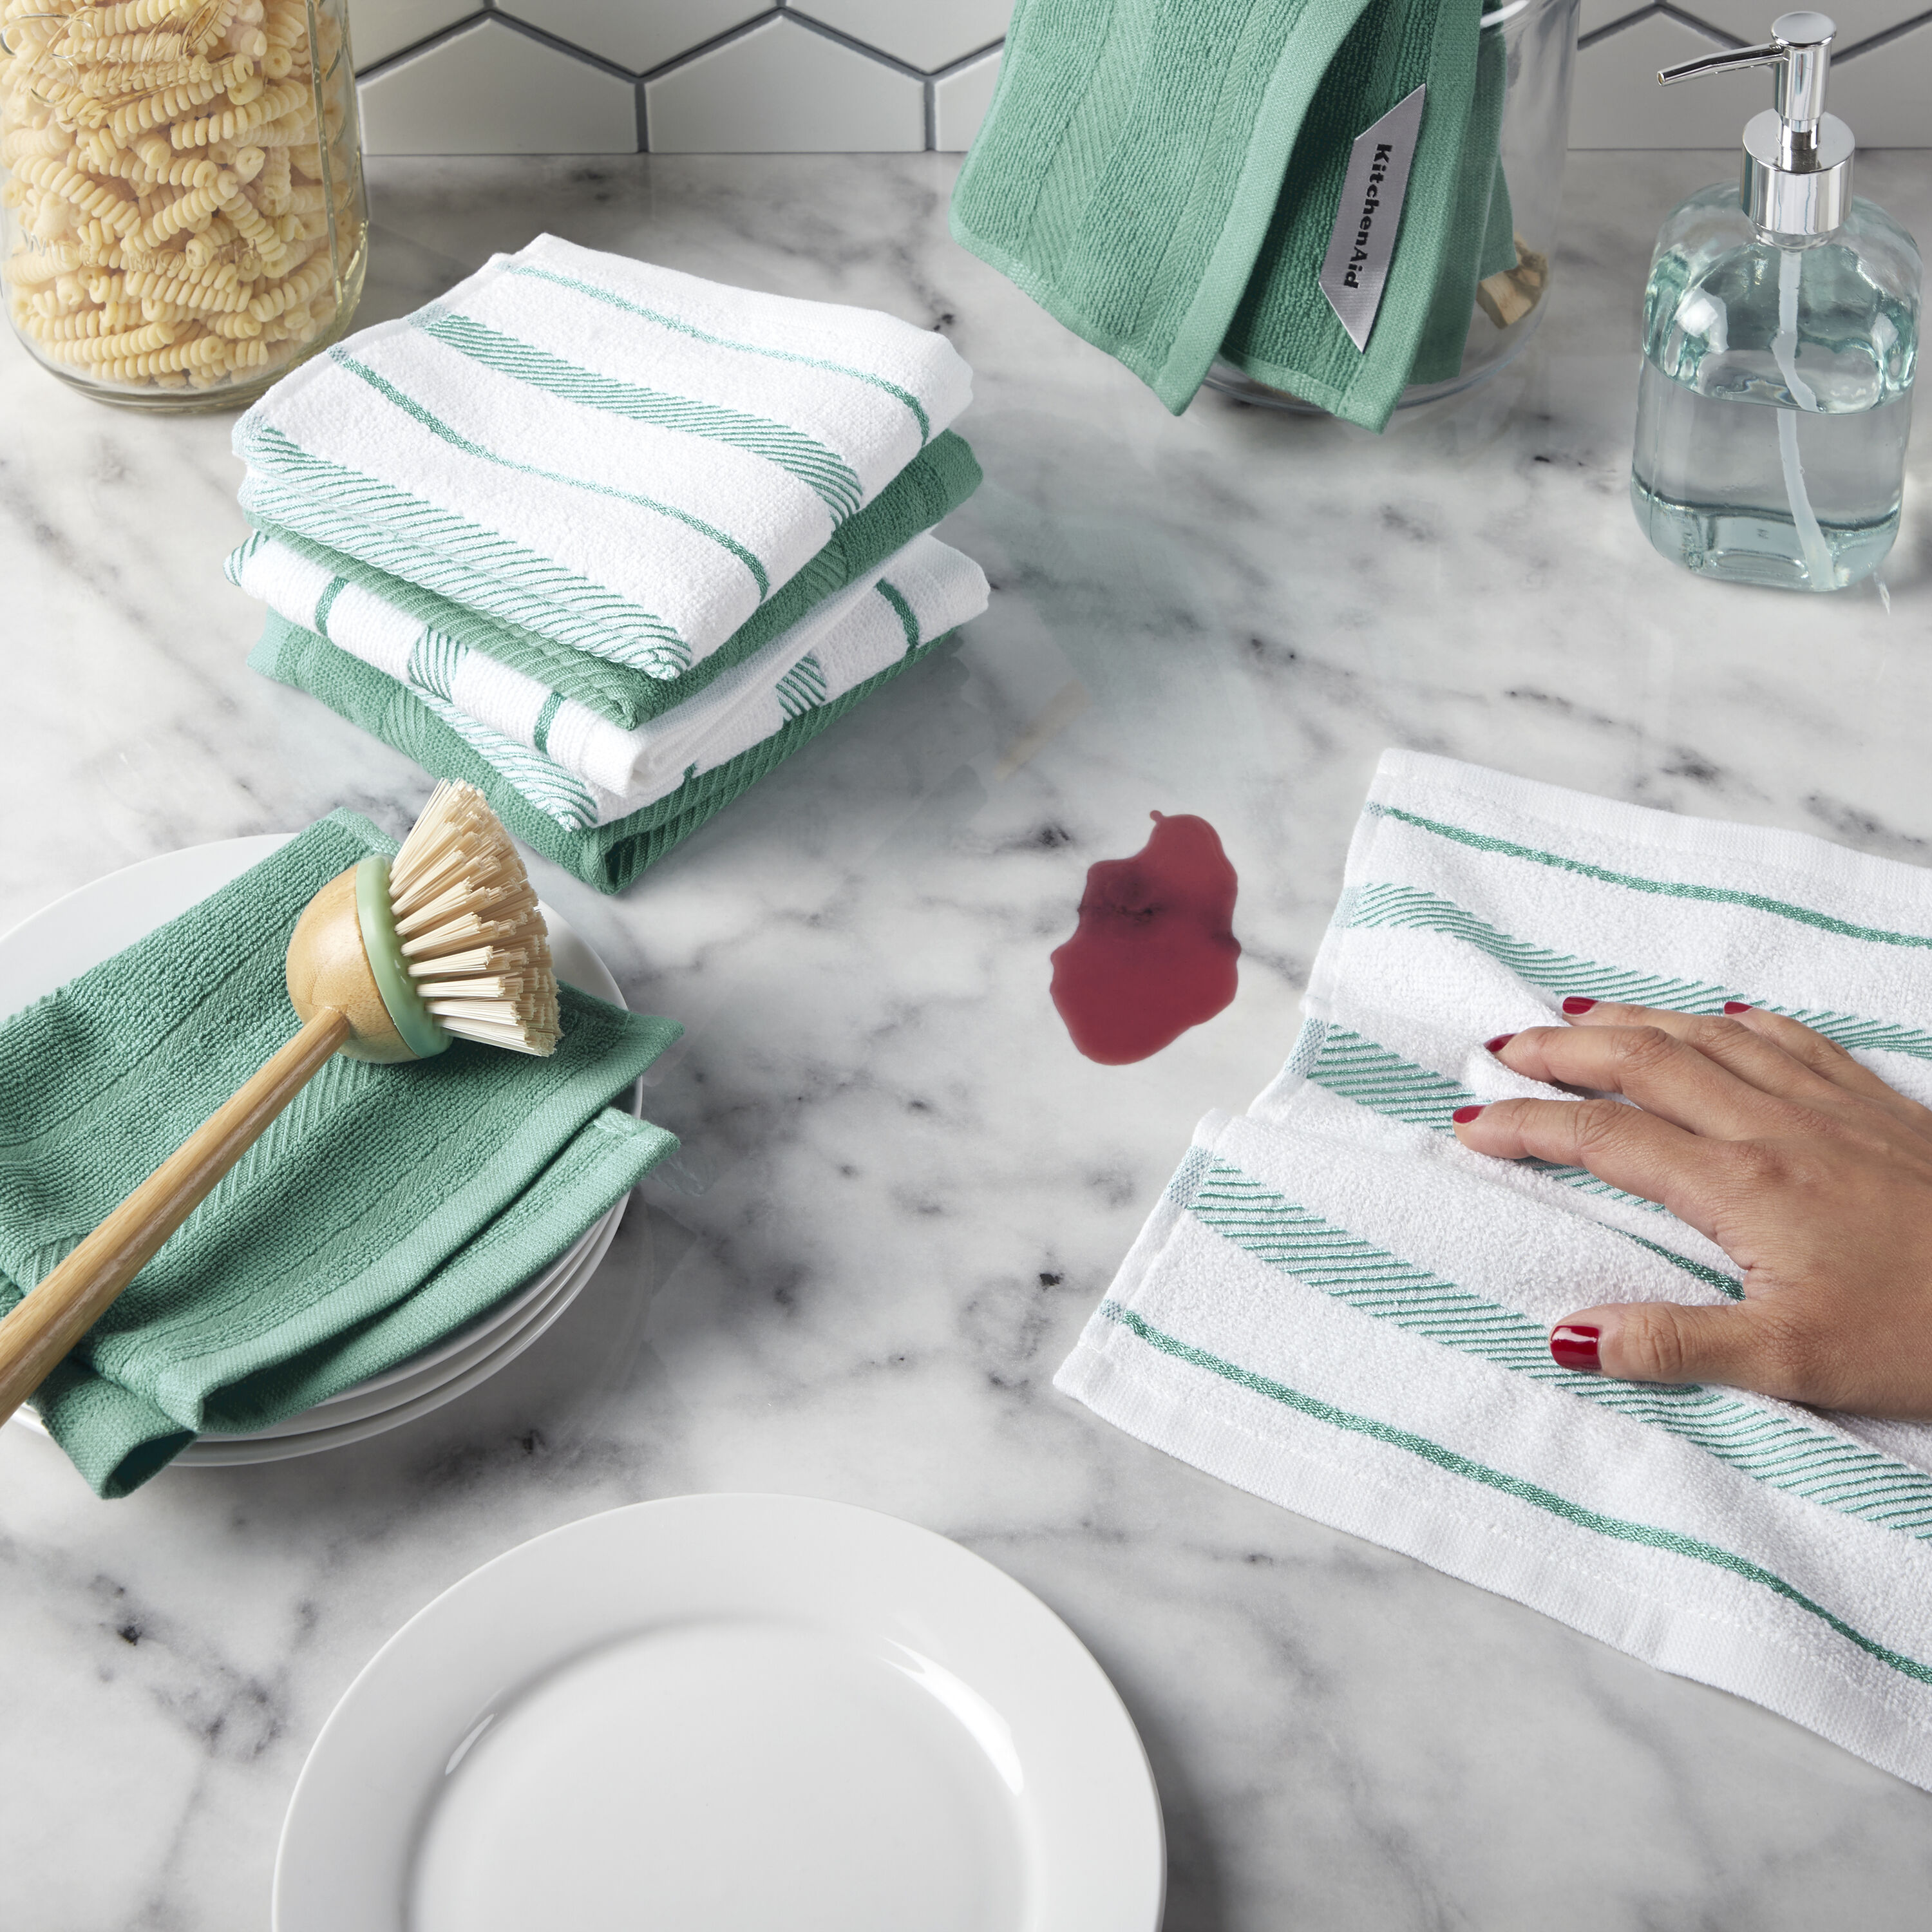 Food Network Kitchen Towel Set Featuring 2 Aqua Stripe Kitchen Towels and 4  Matching Dish Cloths